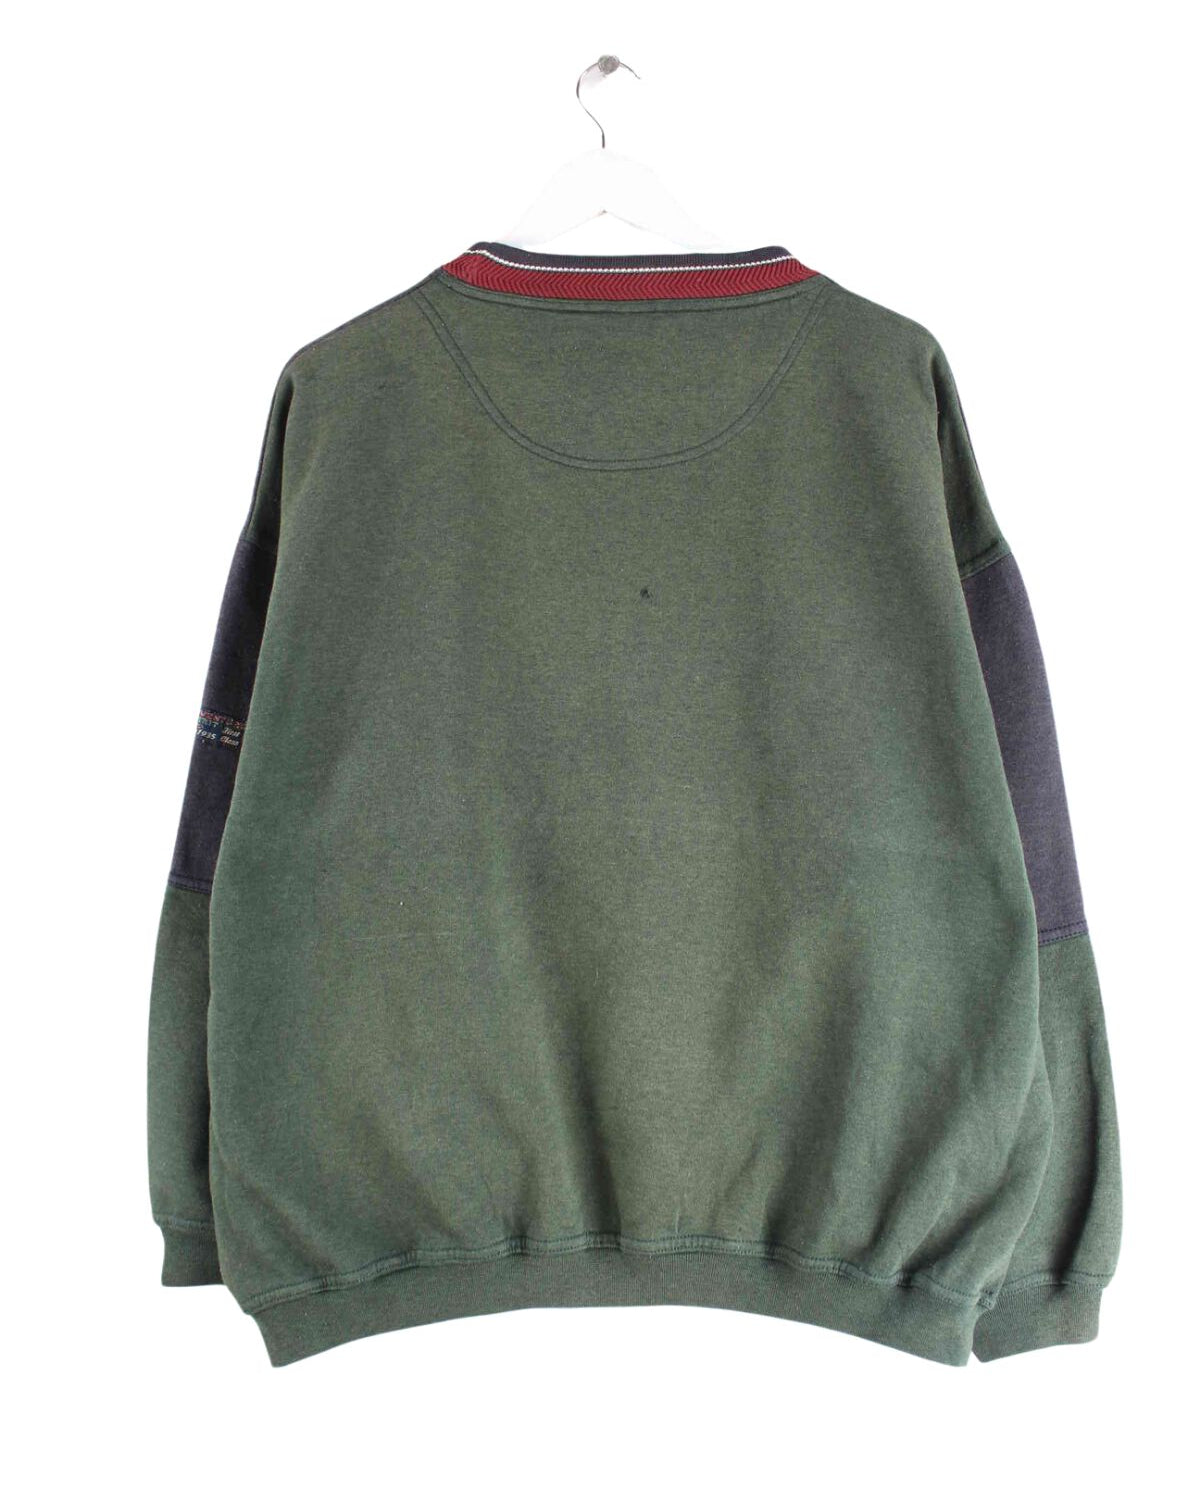 C&A 90s Vintage Embroidered Sweater Grün L (back image)